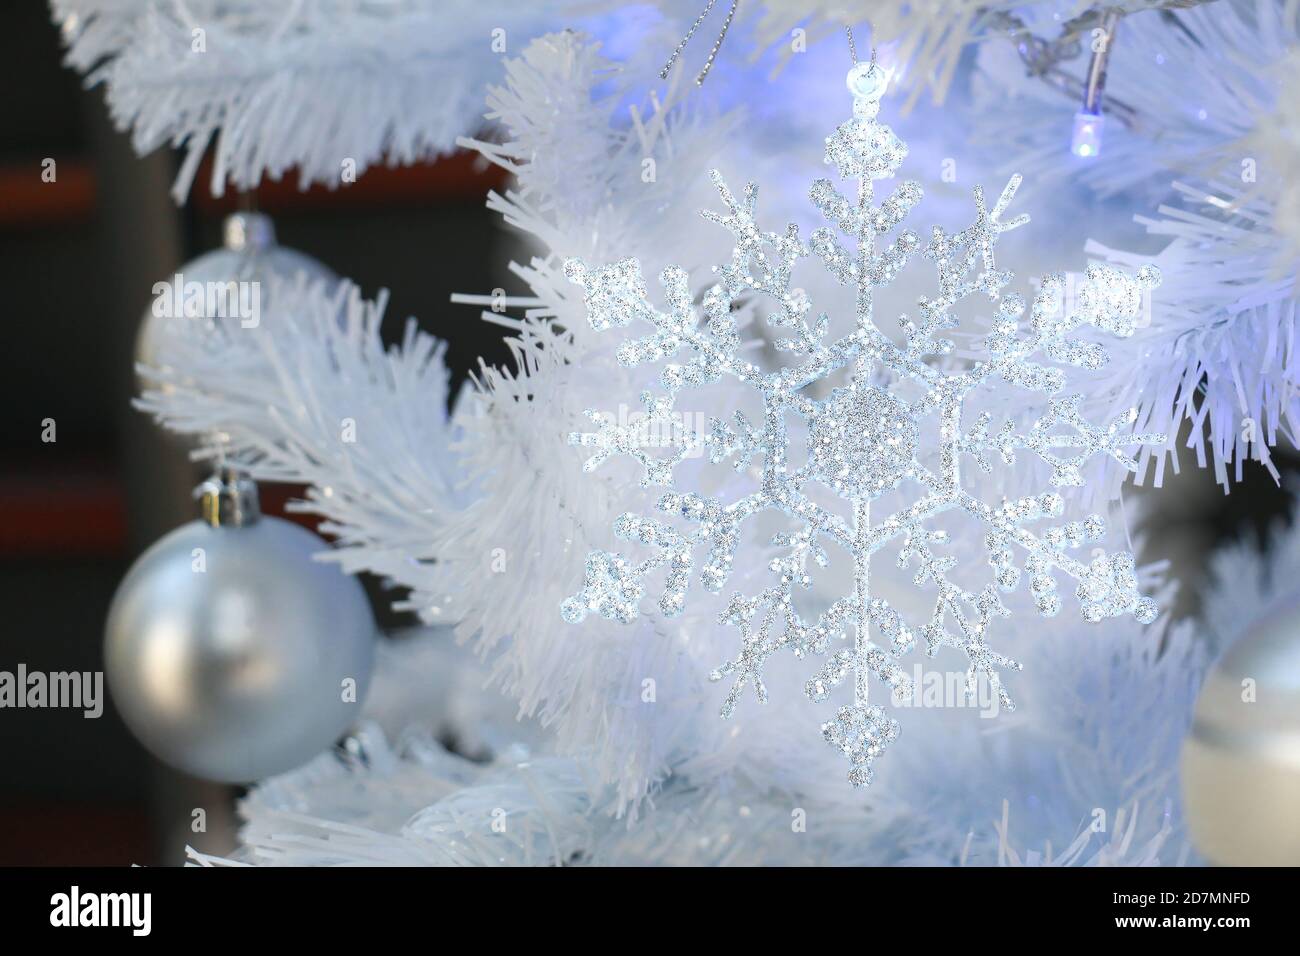 The white Christmas tree….